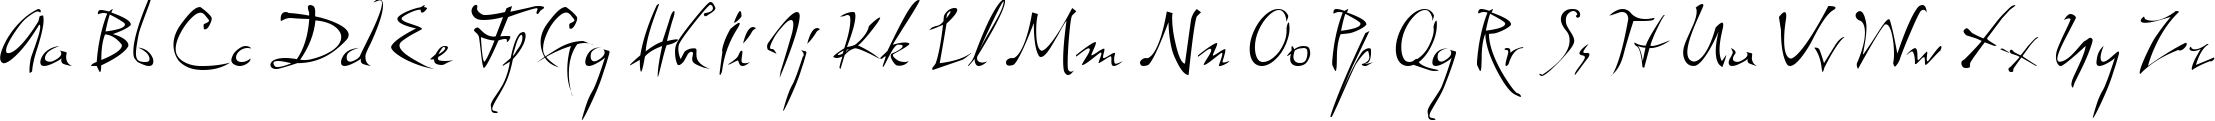 Пример написания английского алфавита шрифтом Dali